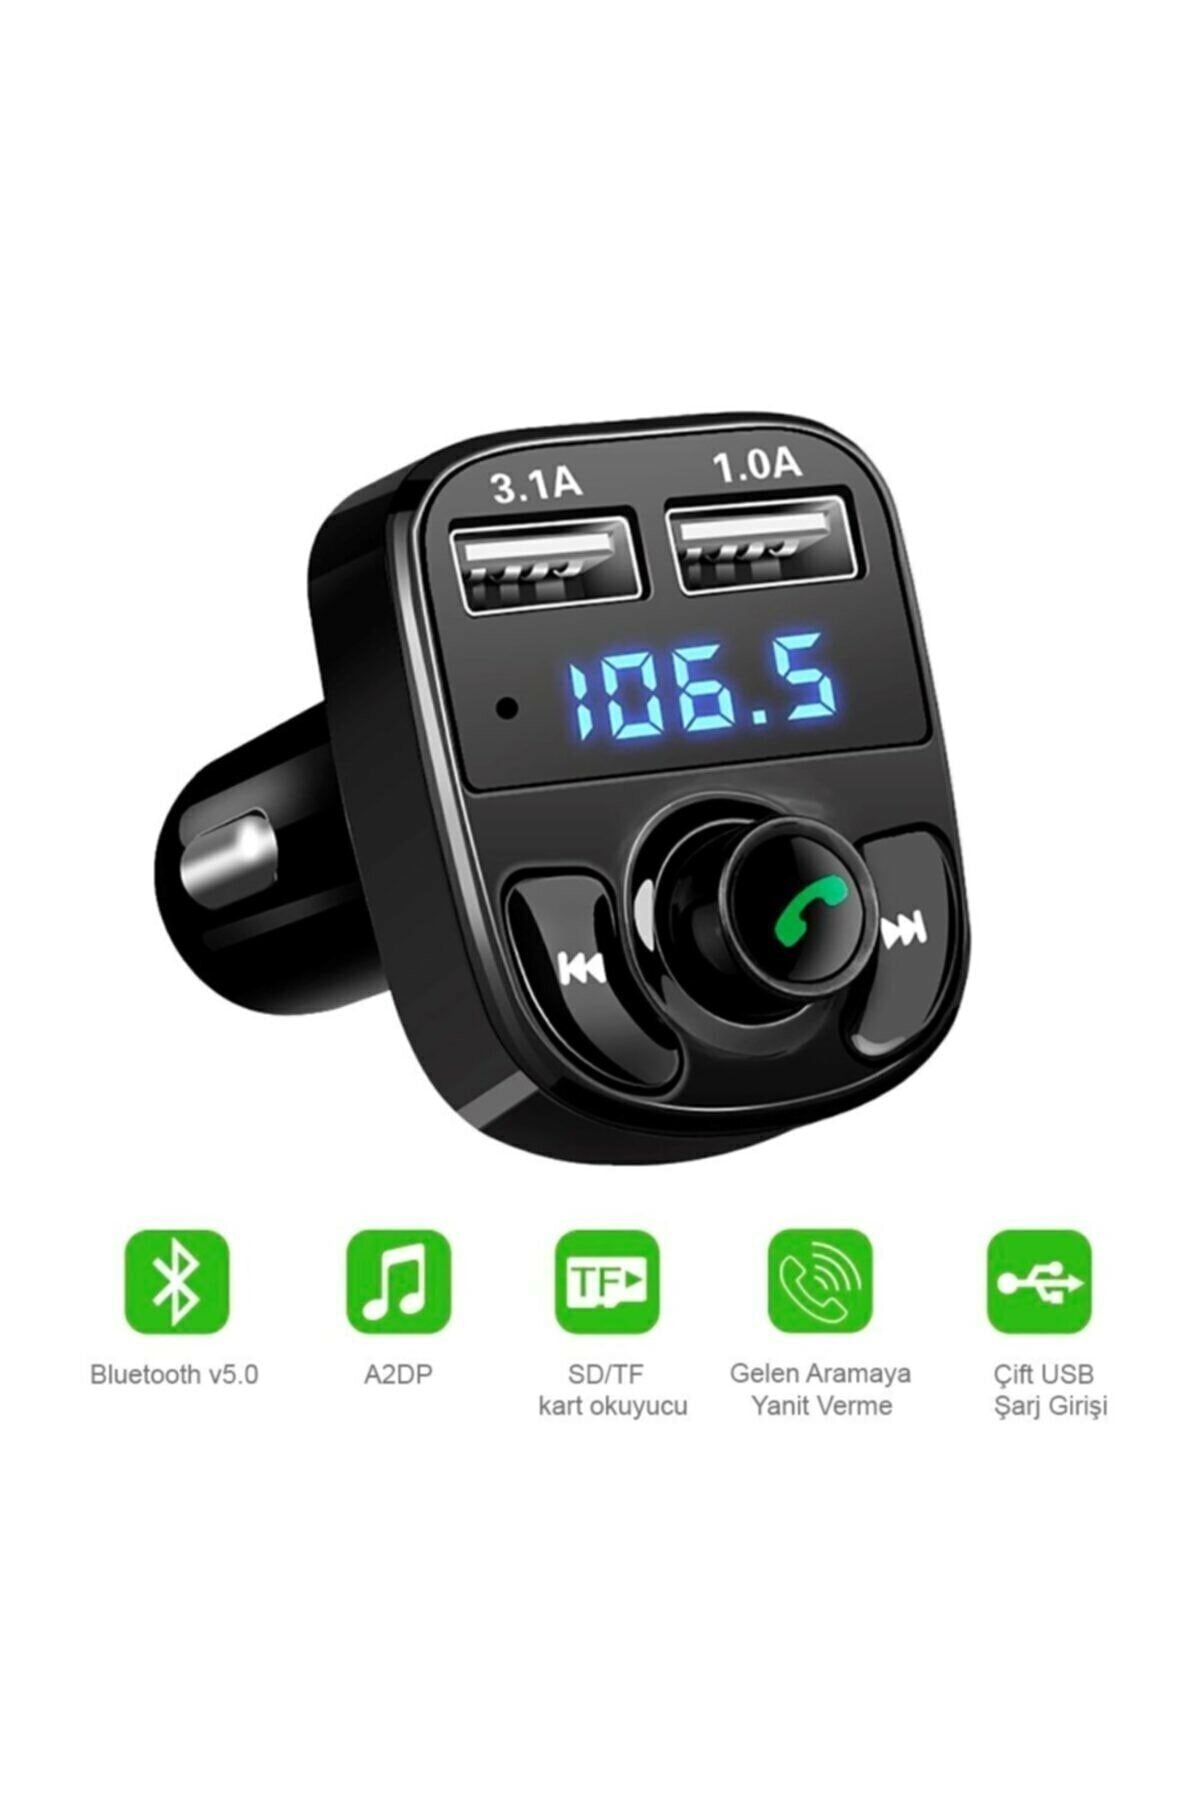 MEZİGARC Fort Focus Hatchback Ghia Uyumlu Fm Transmitter Bluetooth Araç Kiti Araba Müzik Mp3 Çalar